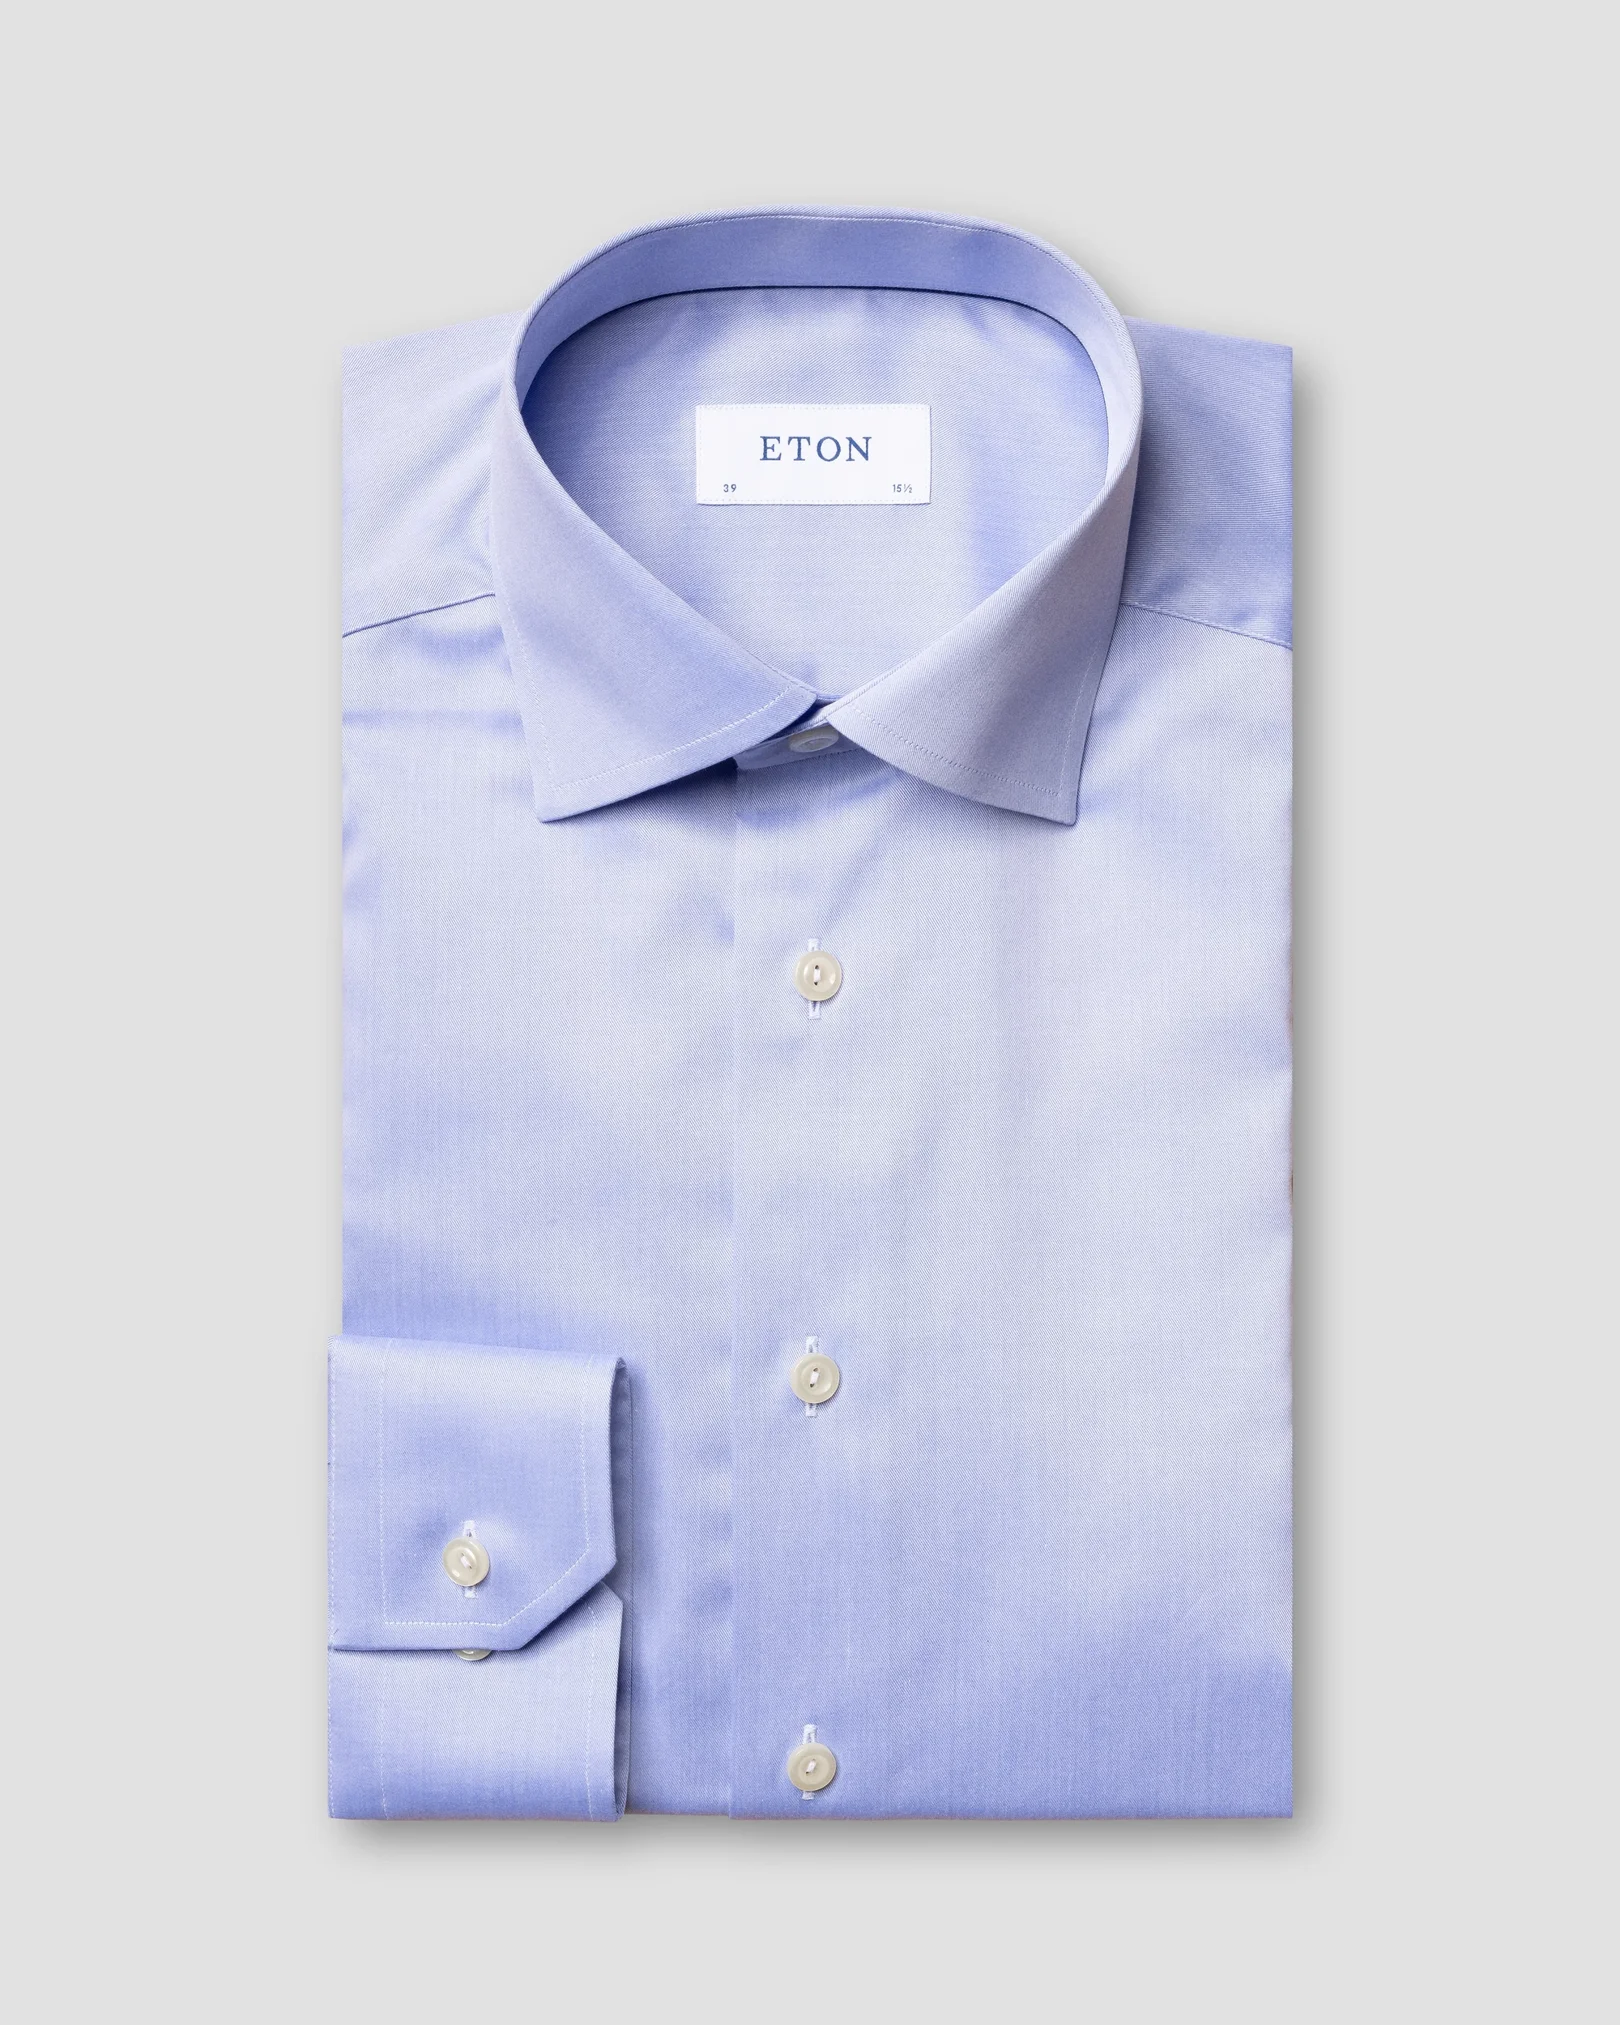 Eton - blue fine twill shirt